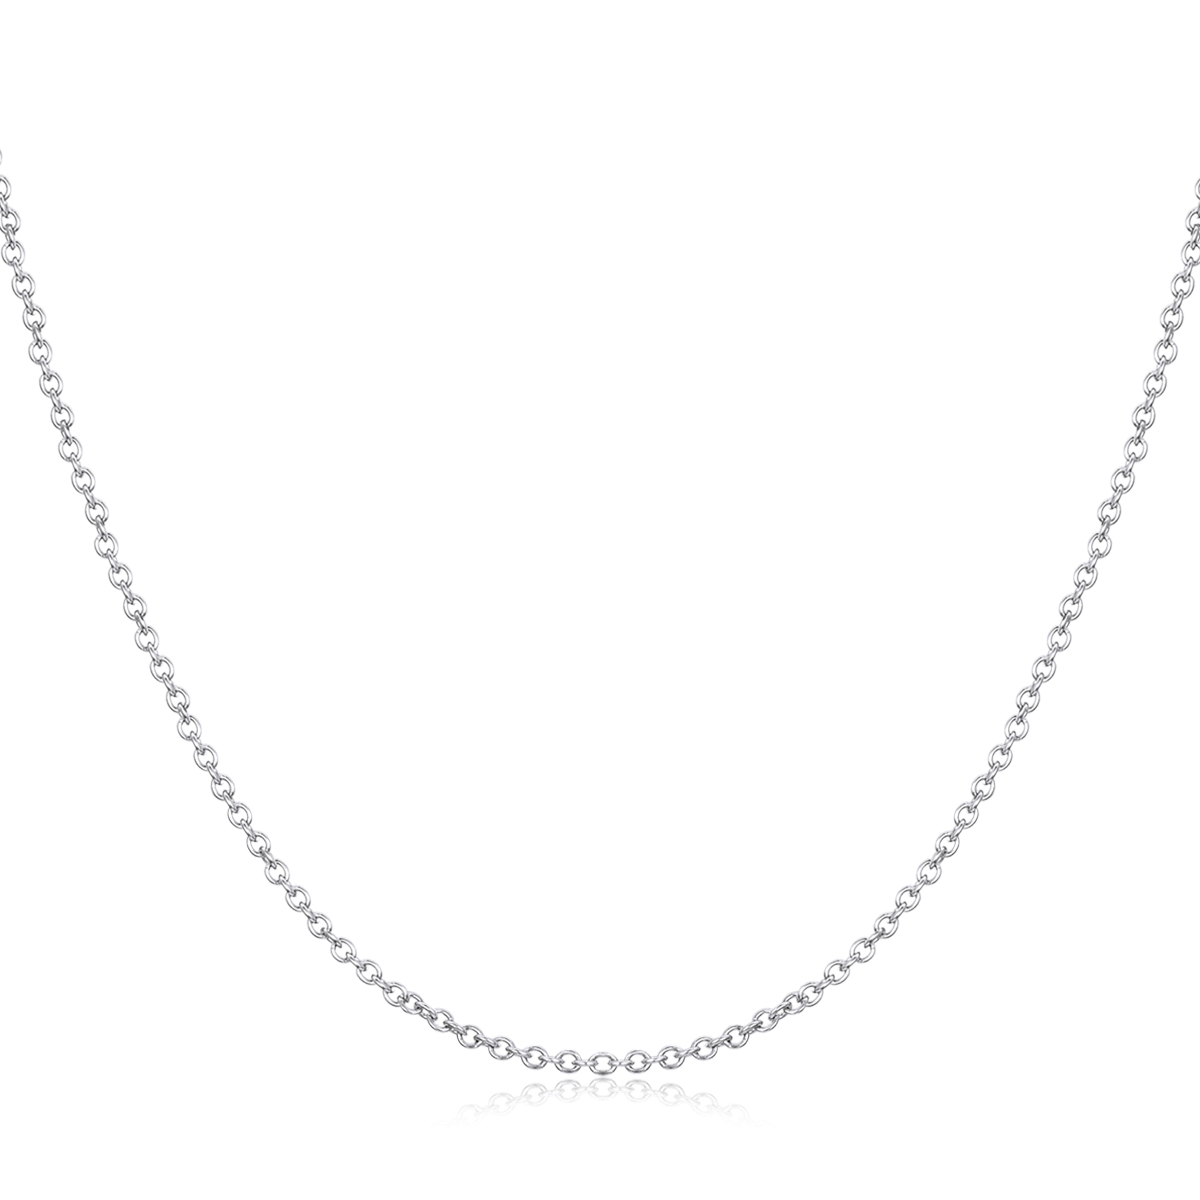 pandora style basic chain necklace bsn228